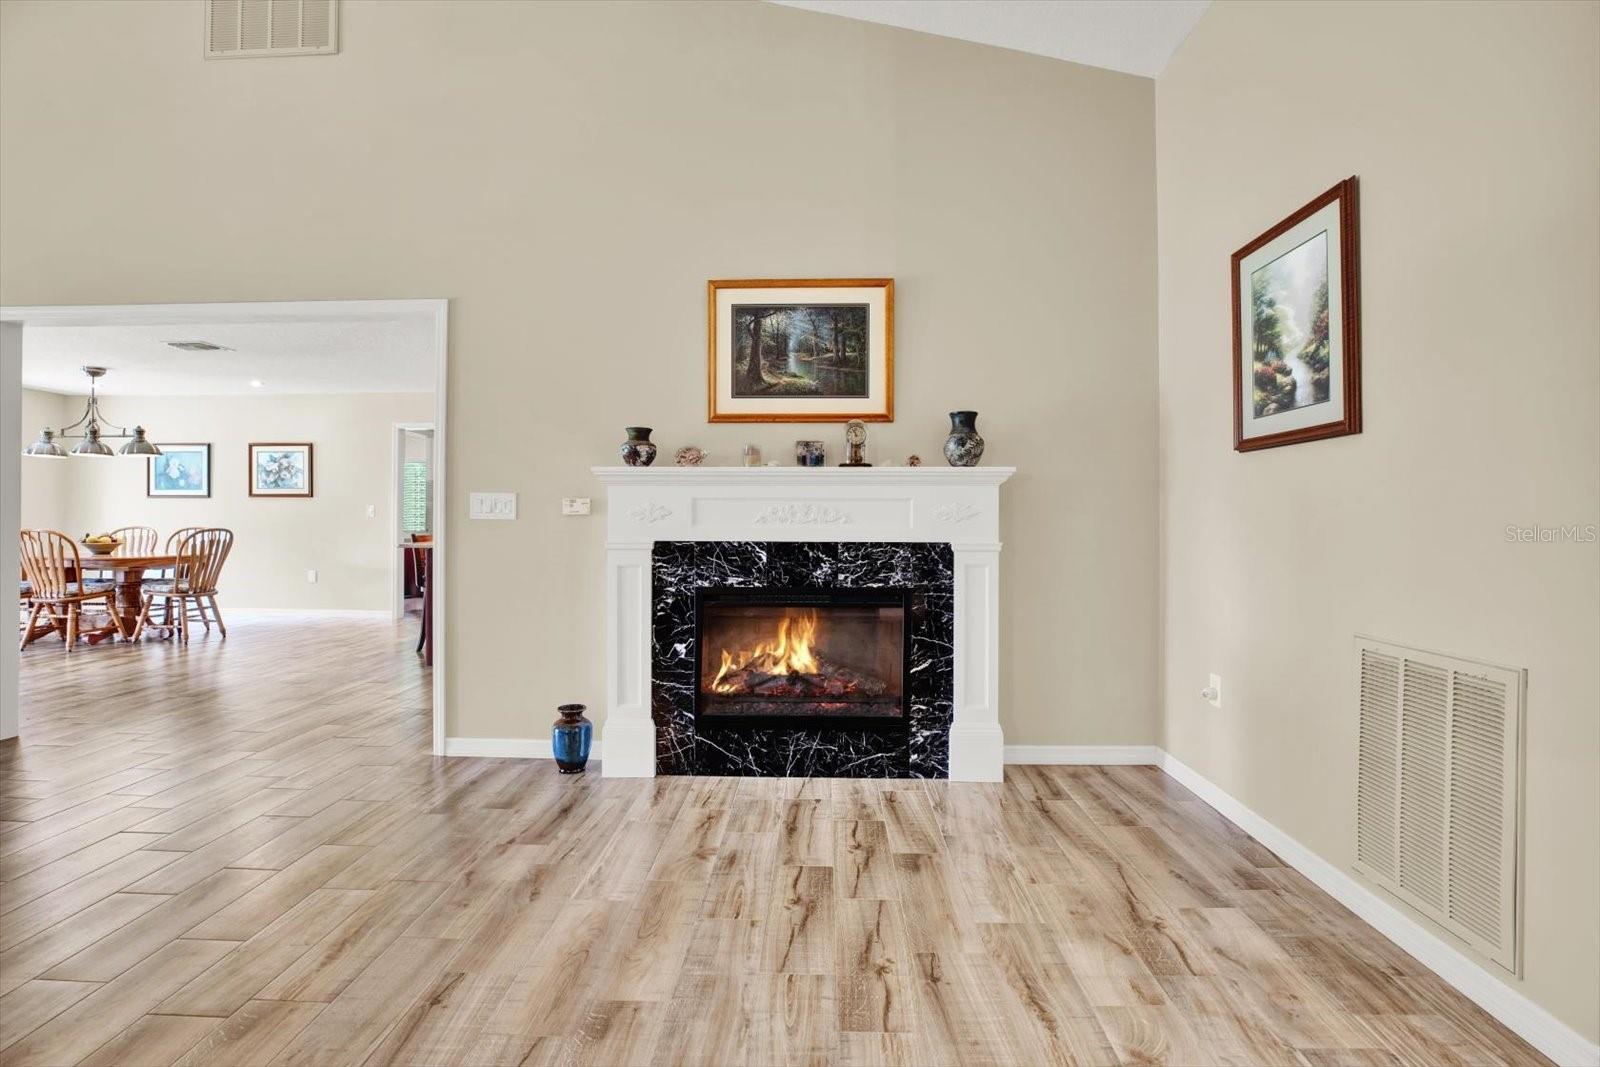 Wood-Look Tile Floor & Neutral Paint Throughout!